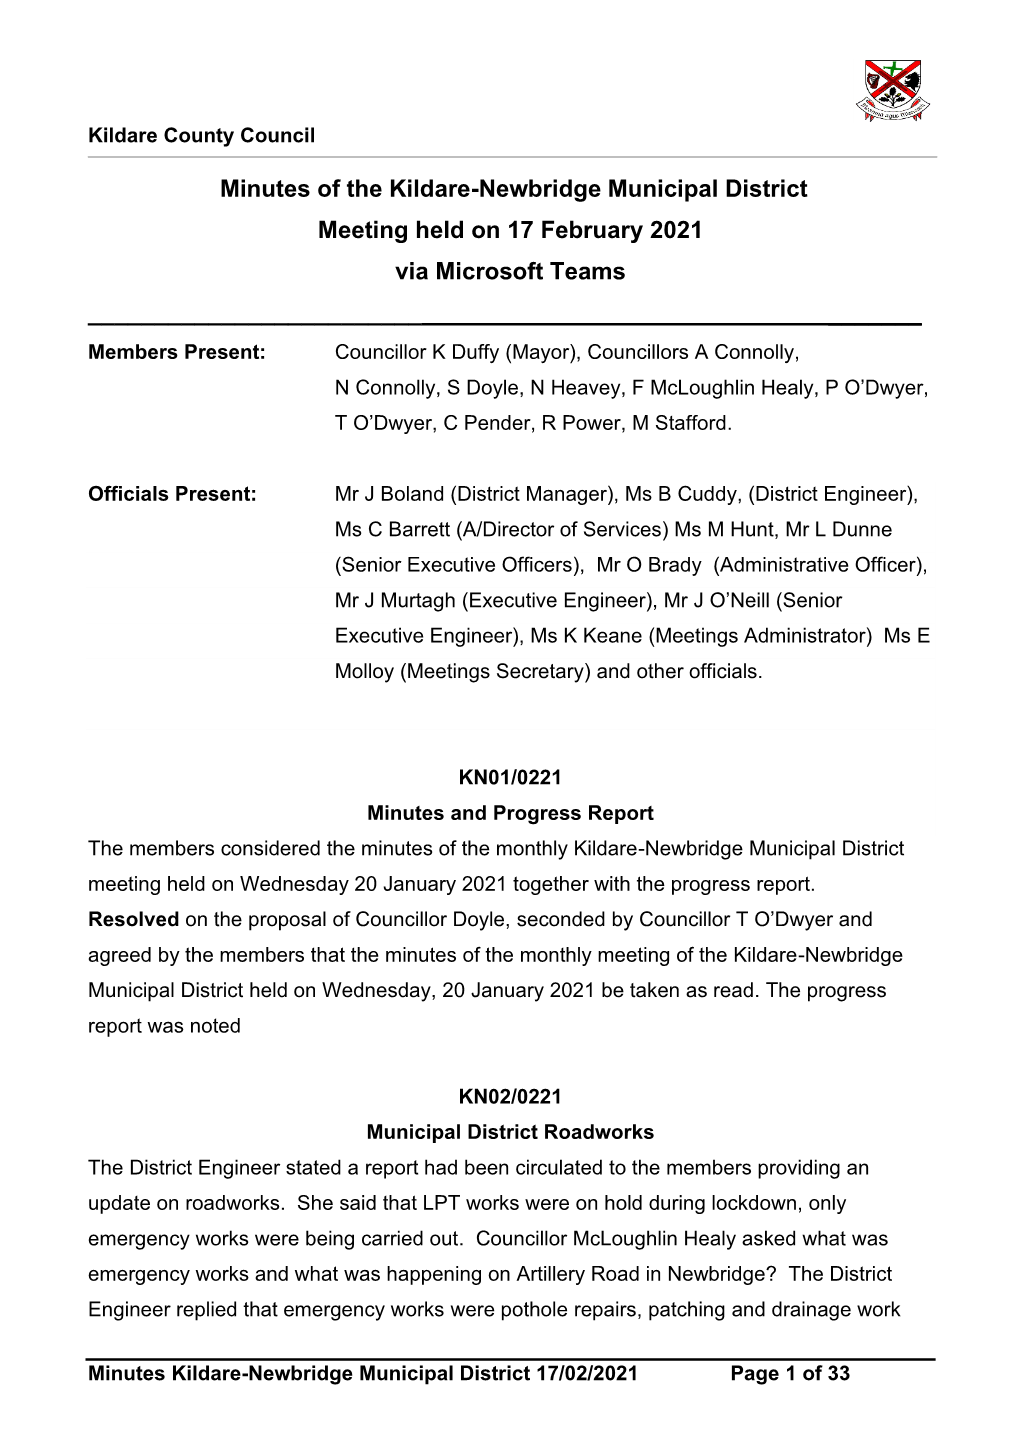 Minutes for Kildare-Newbridge Municipal District Meeting on 17